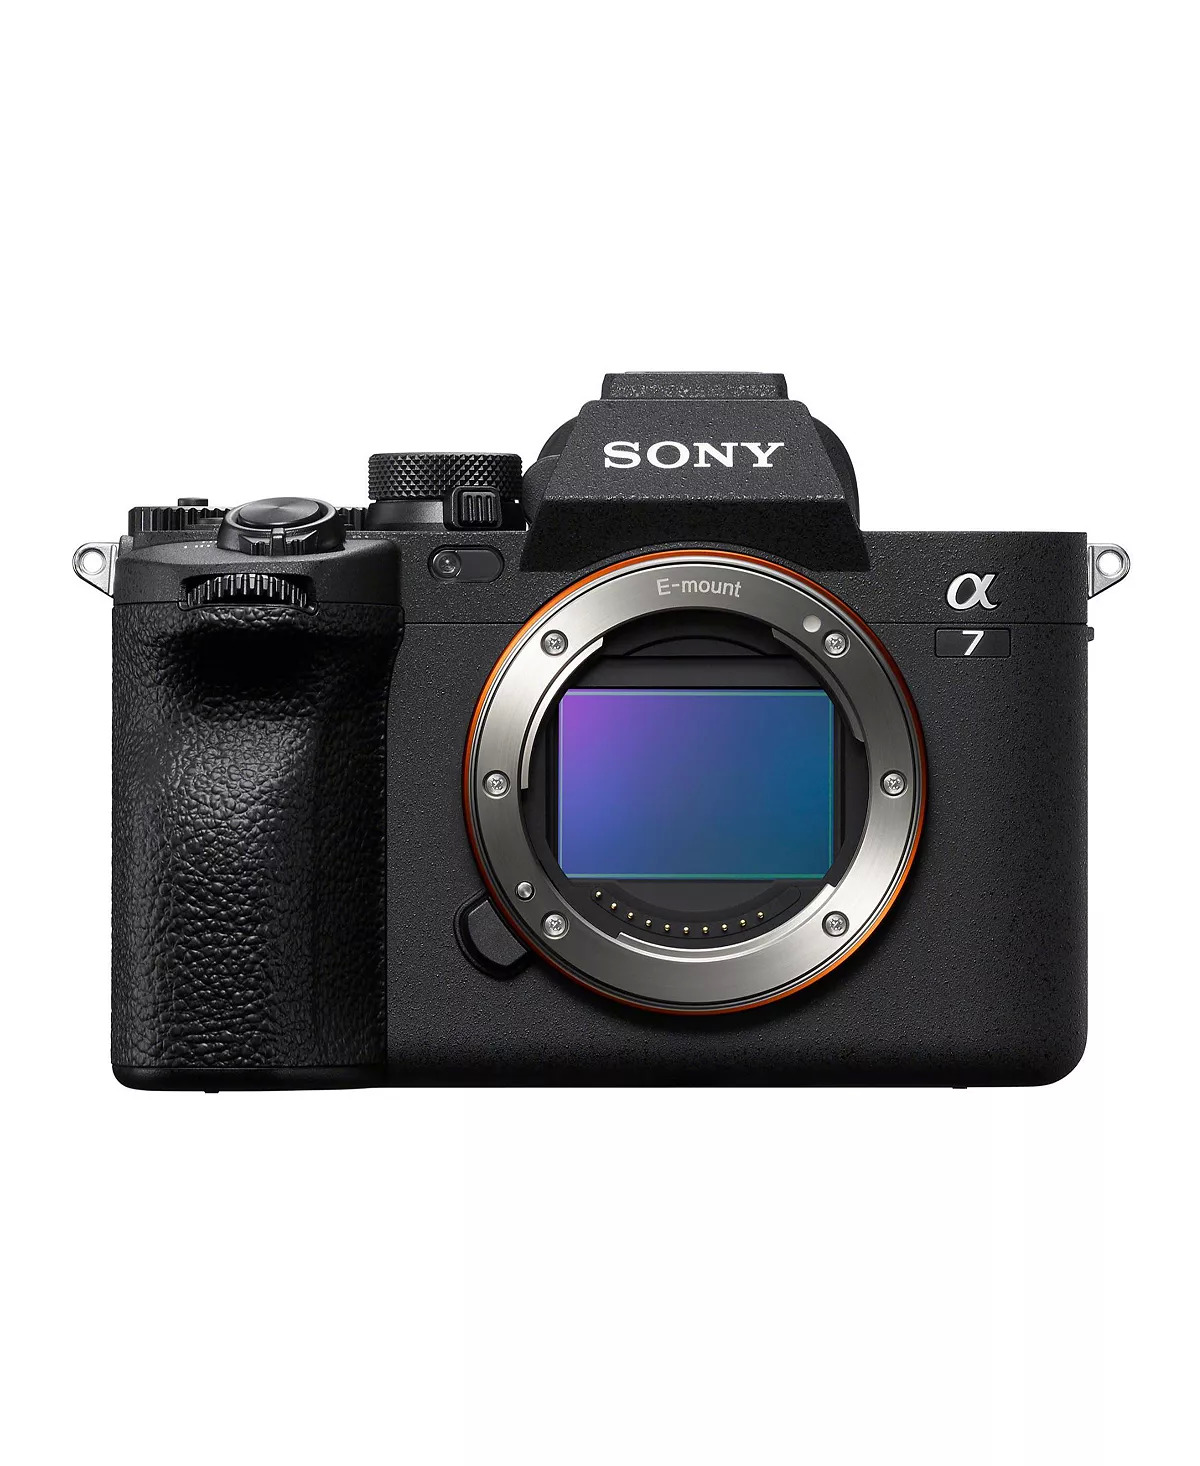 Sony Alpha 7 Iv Full-frame Mirror less Interchangeable Lens Camera $1748.6